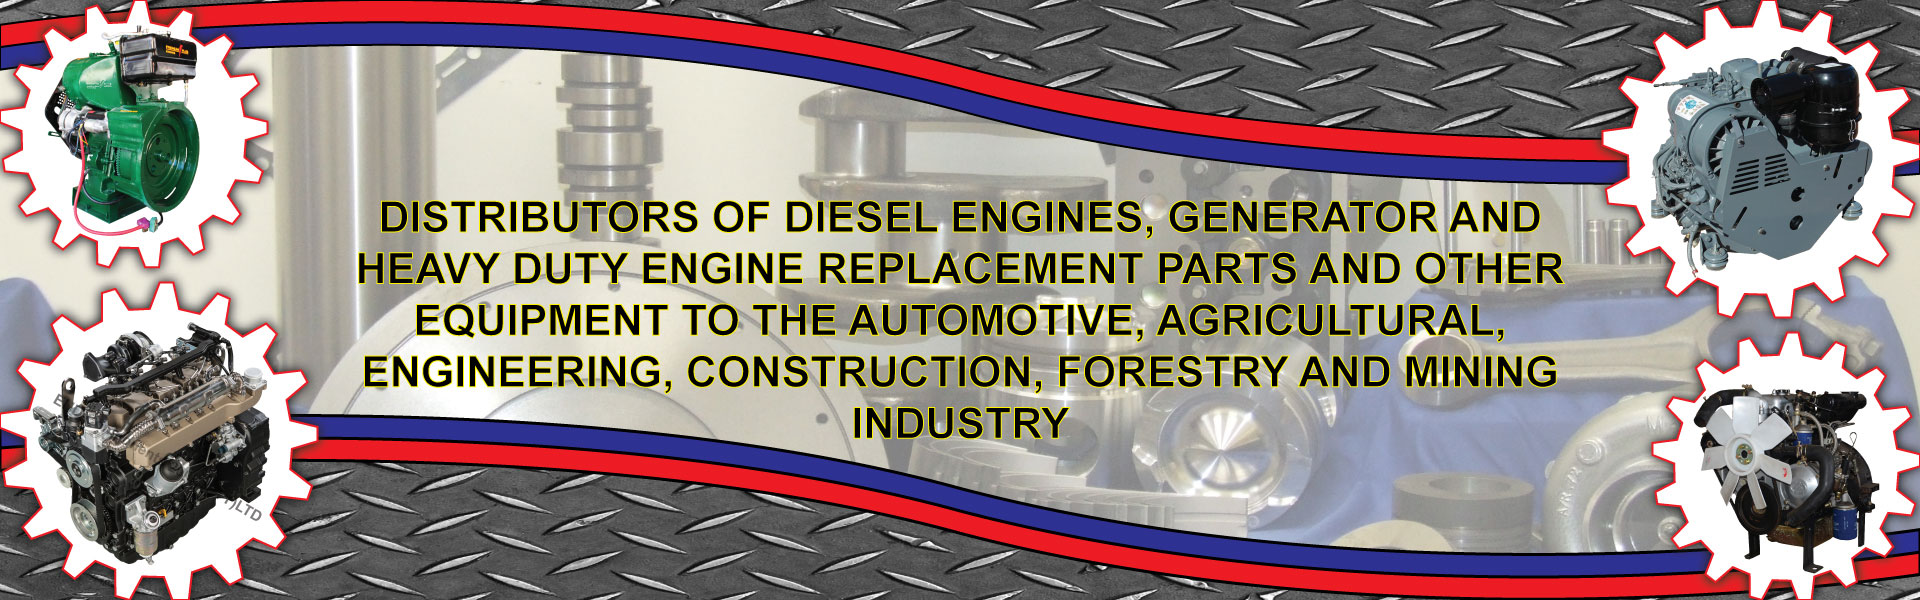 Distributors-of-diesel-engines,-generators,-construction-equipment-and-parts-2024-web